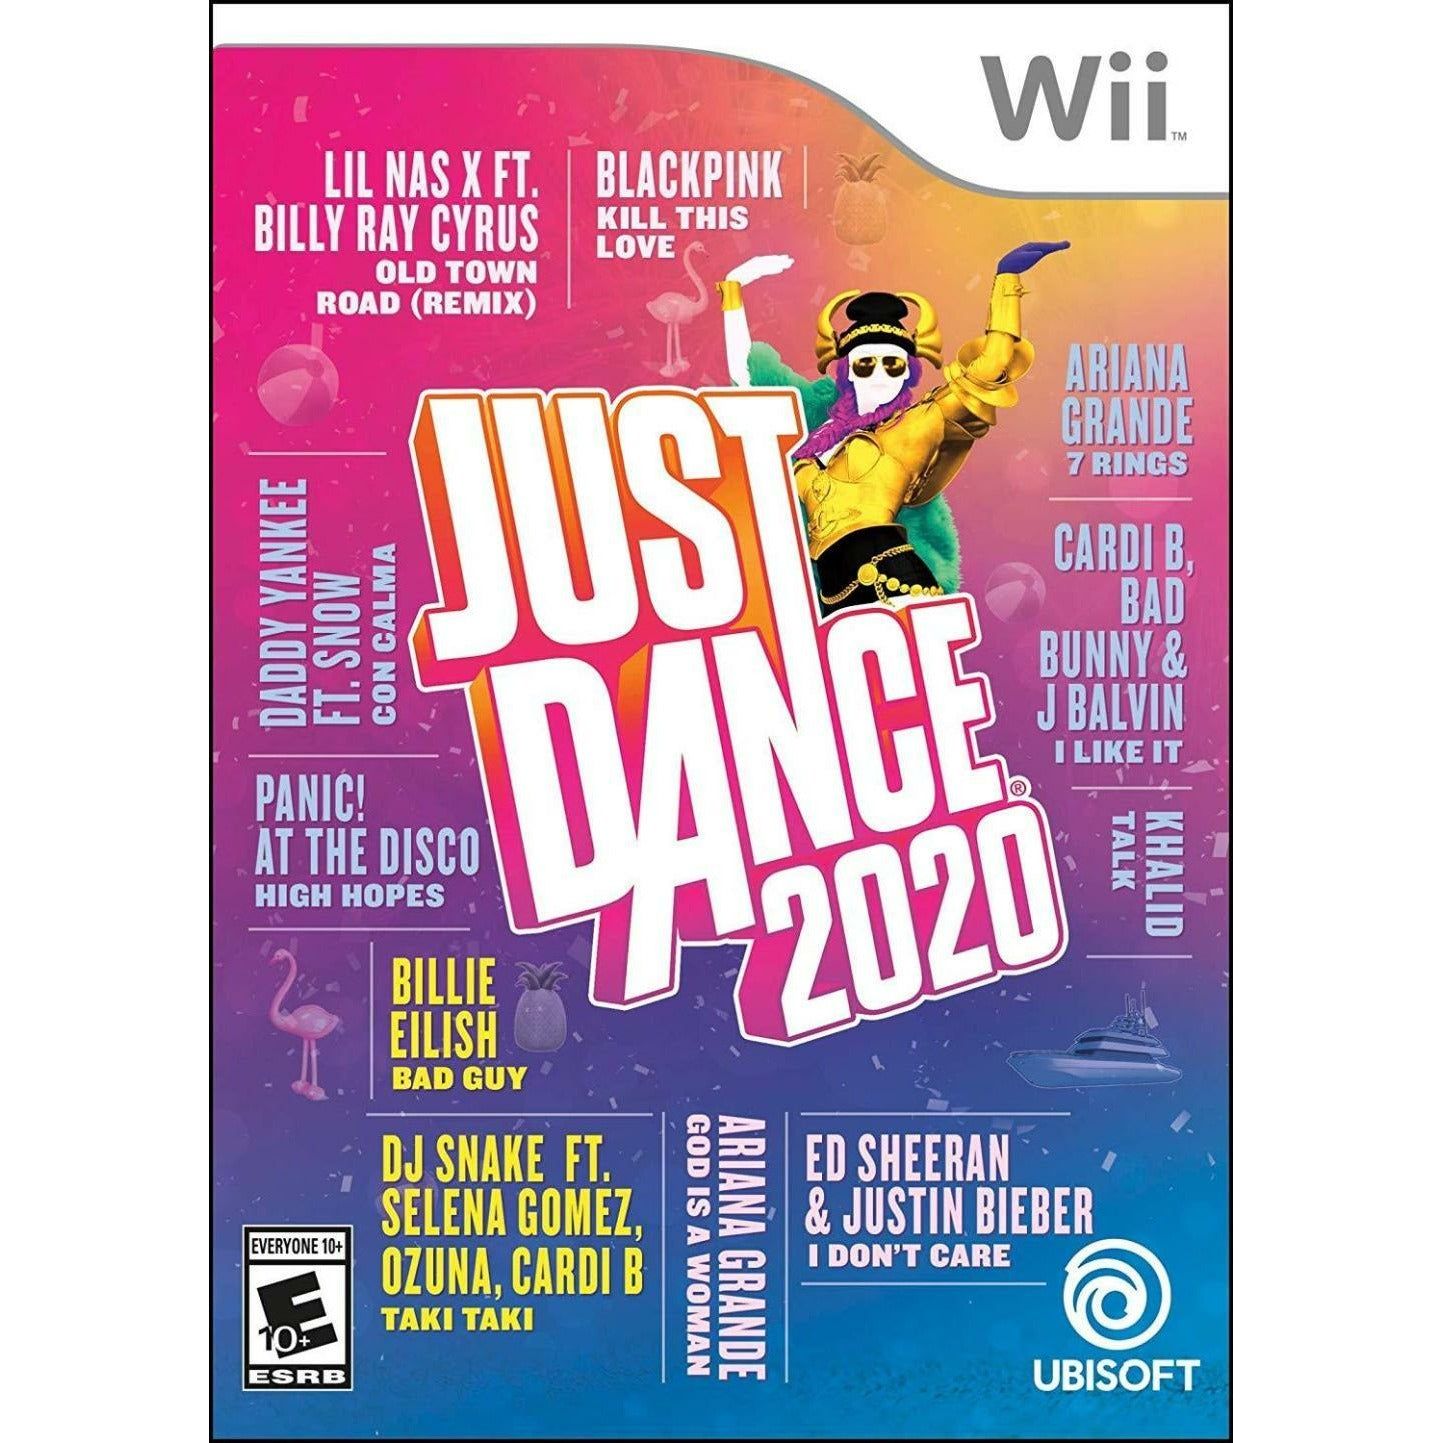 Wii - Just Dance 2020